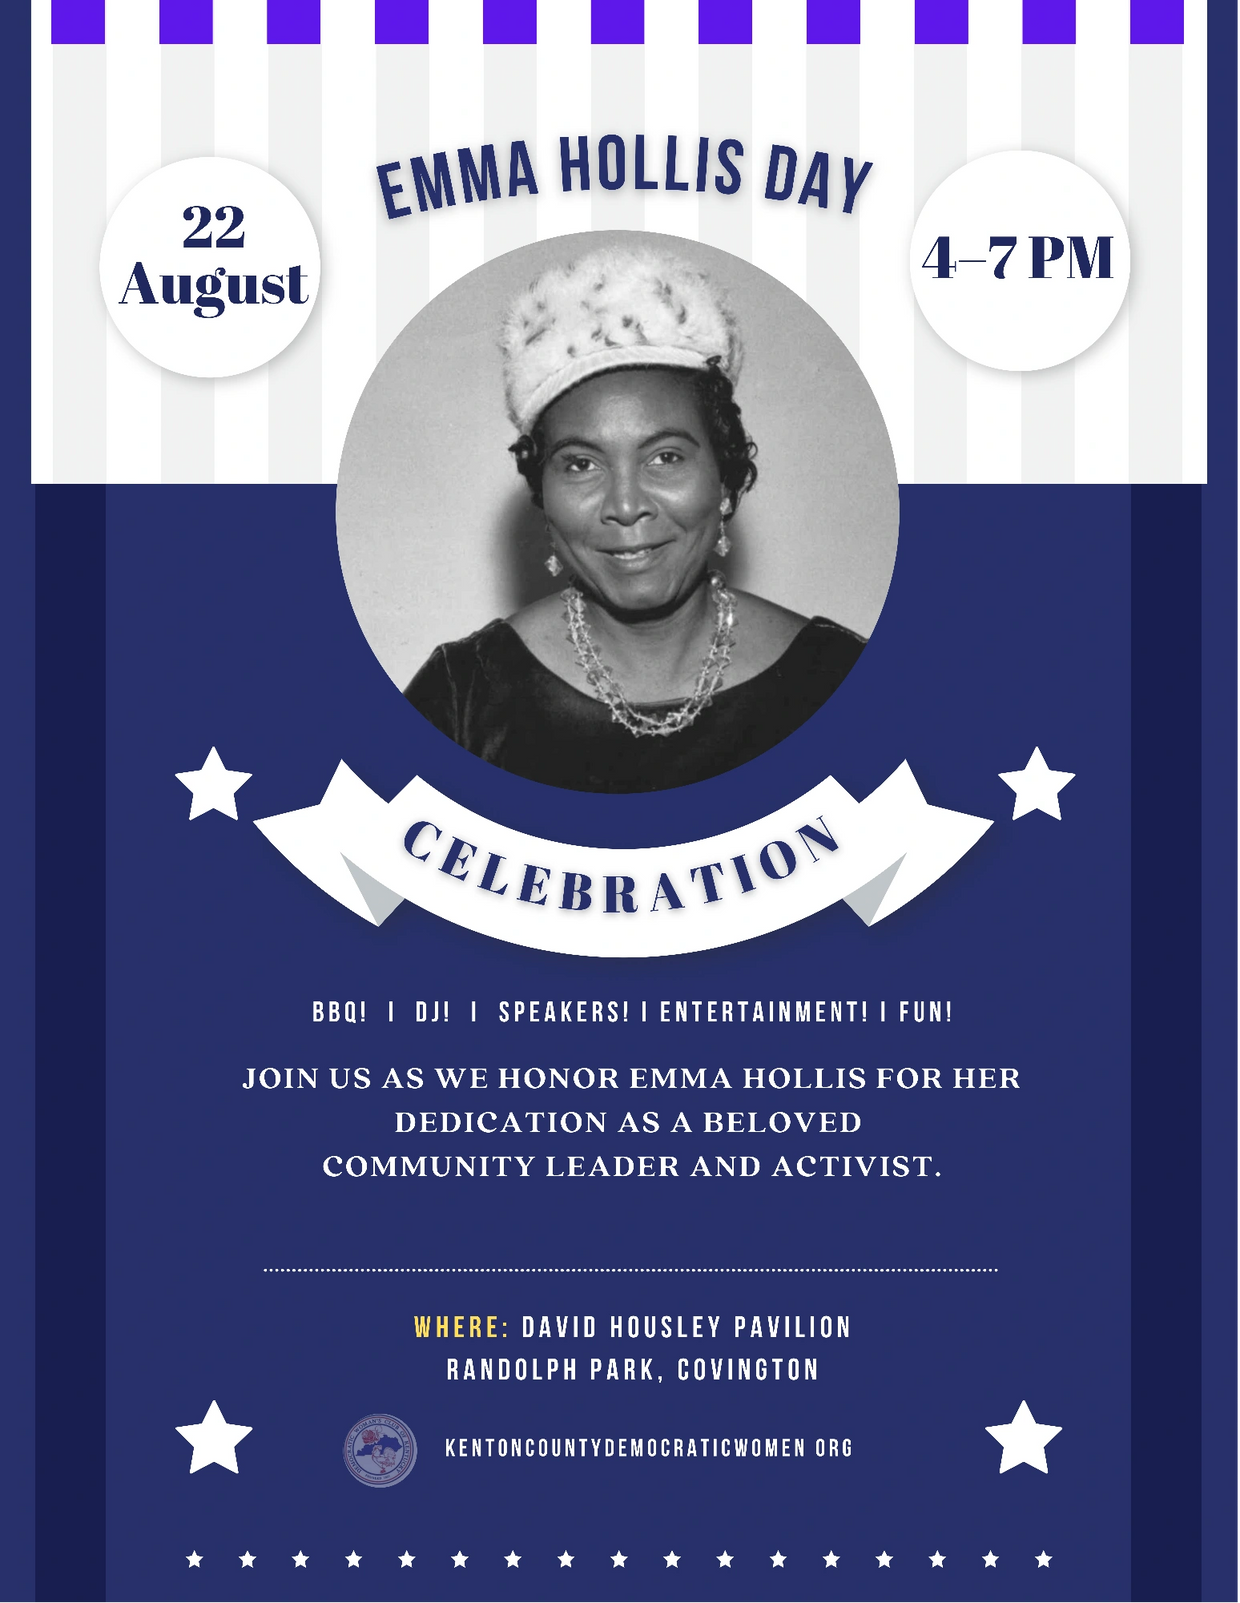 Emma Hollis Day Celebration, August 22, 4–7 PM David Housley Pavilion, Randolph Park,